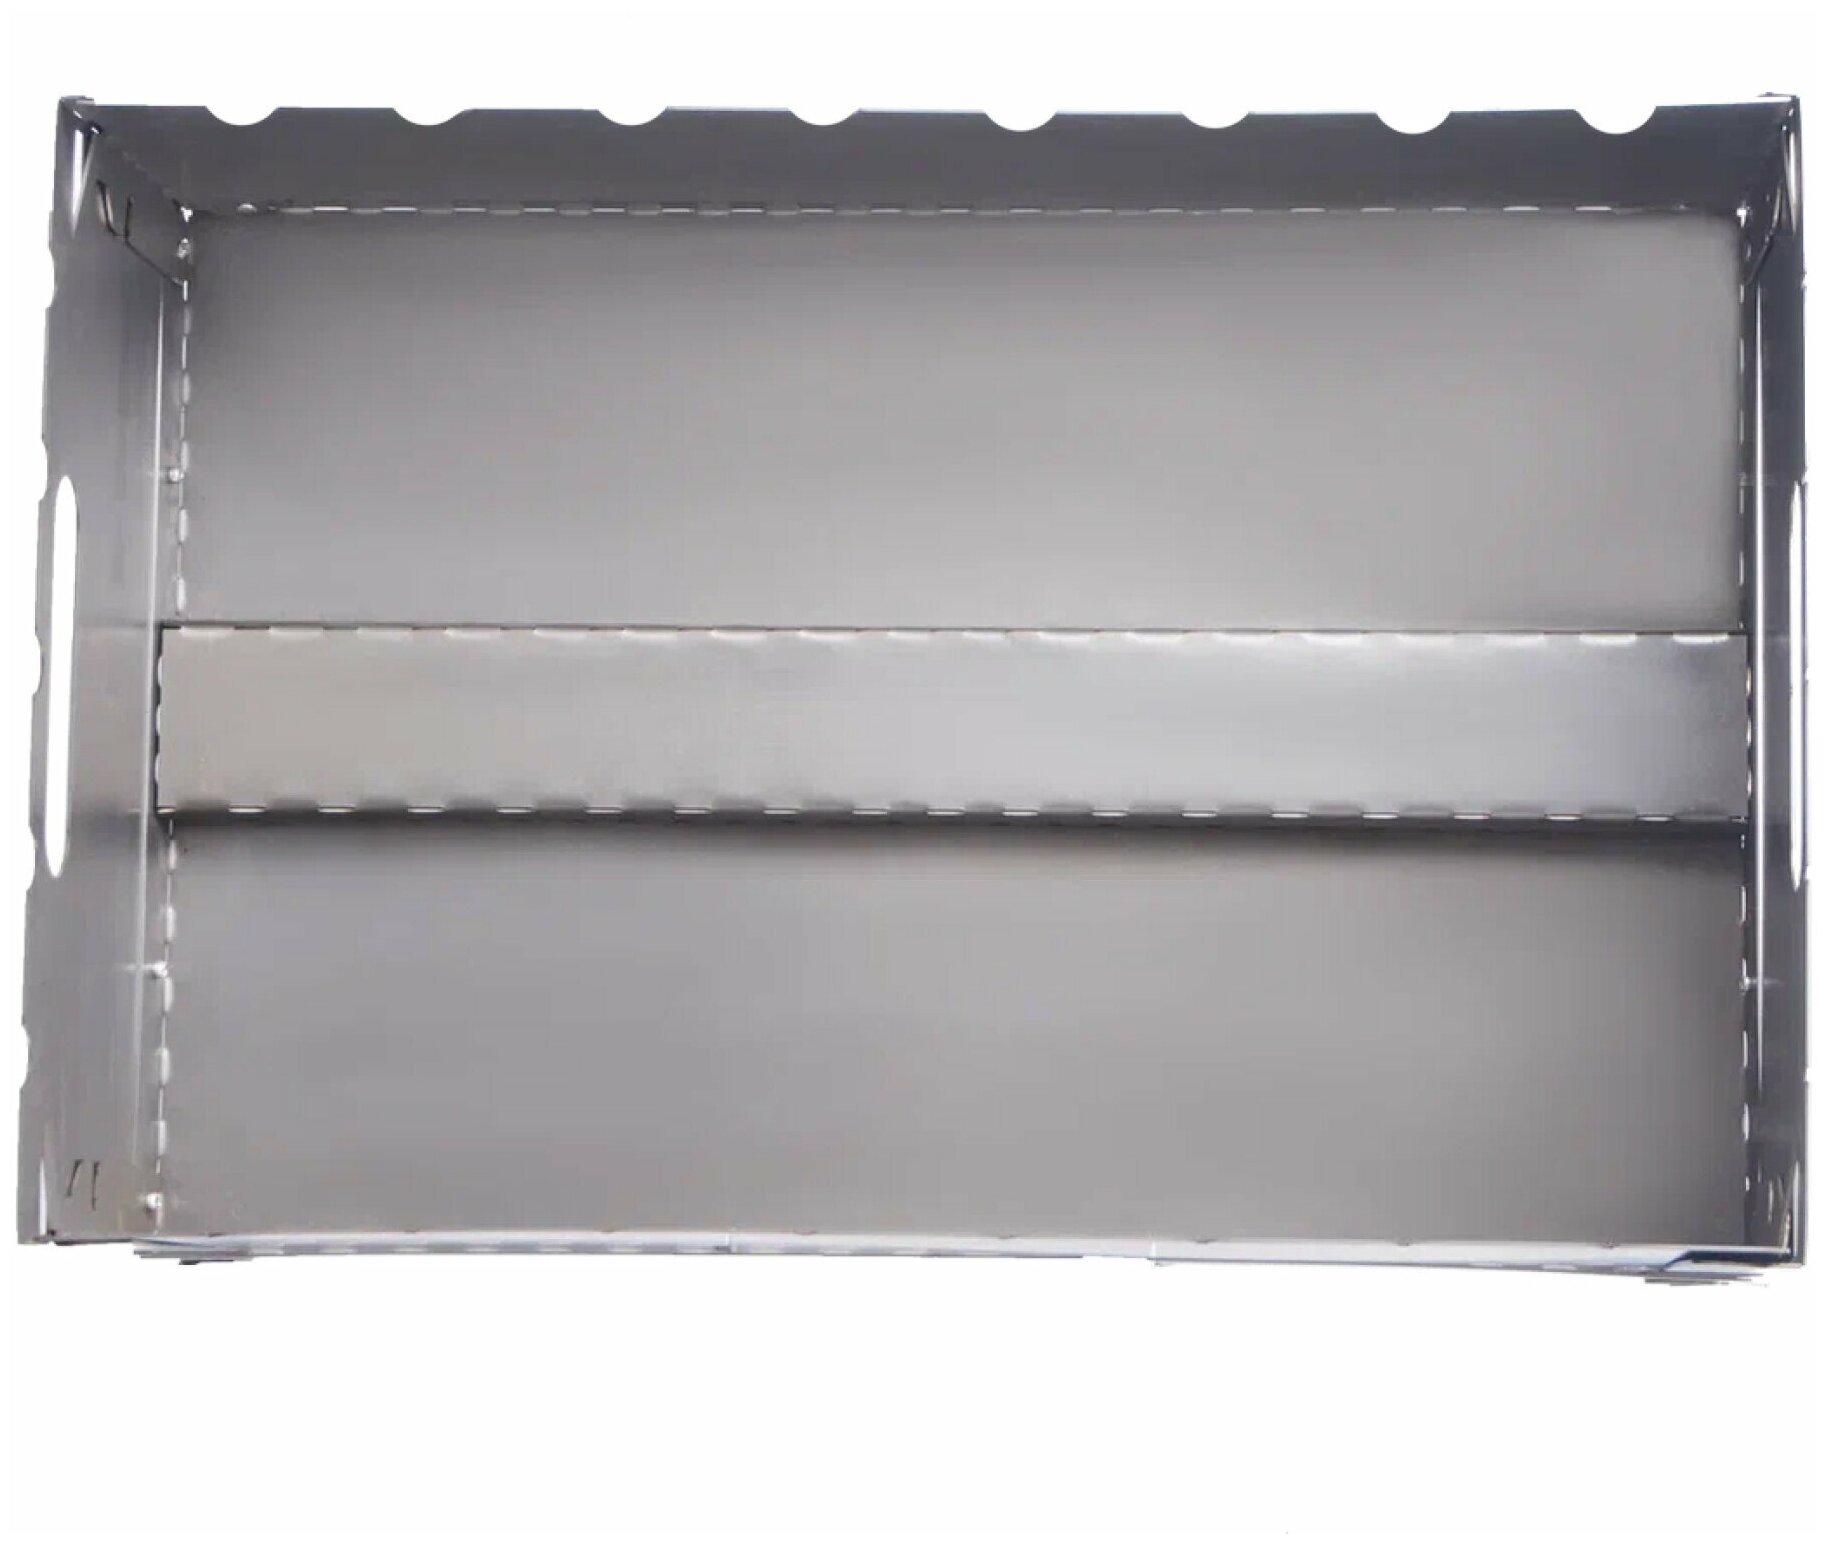 Складной мангал Helicon из углеродистой стали (чемодан) сборка - разборка за 7 секунд